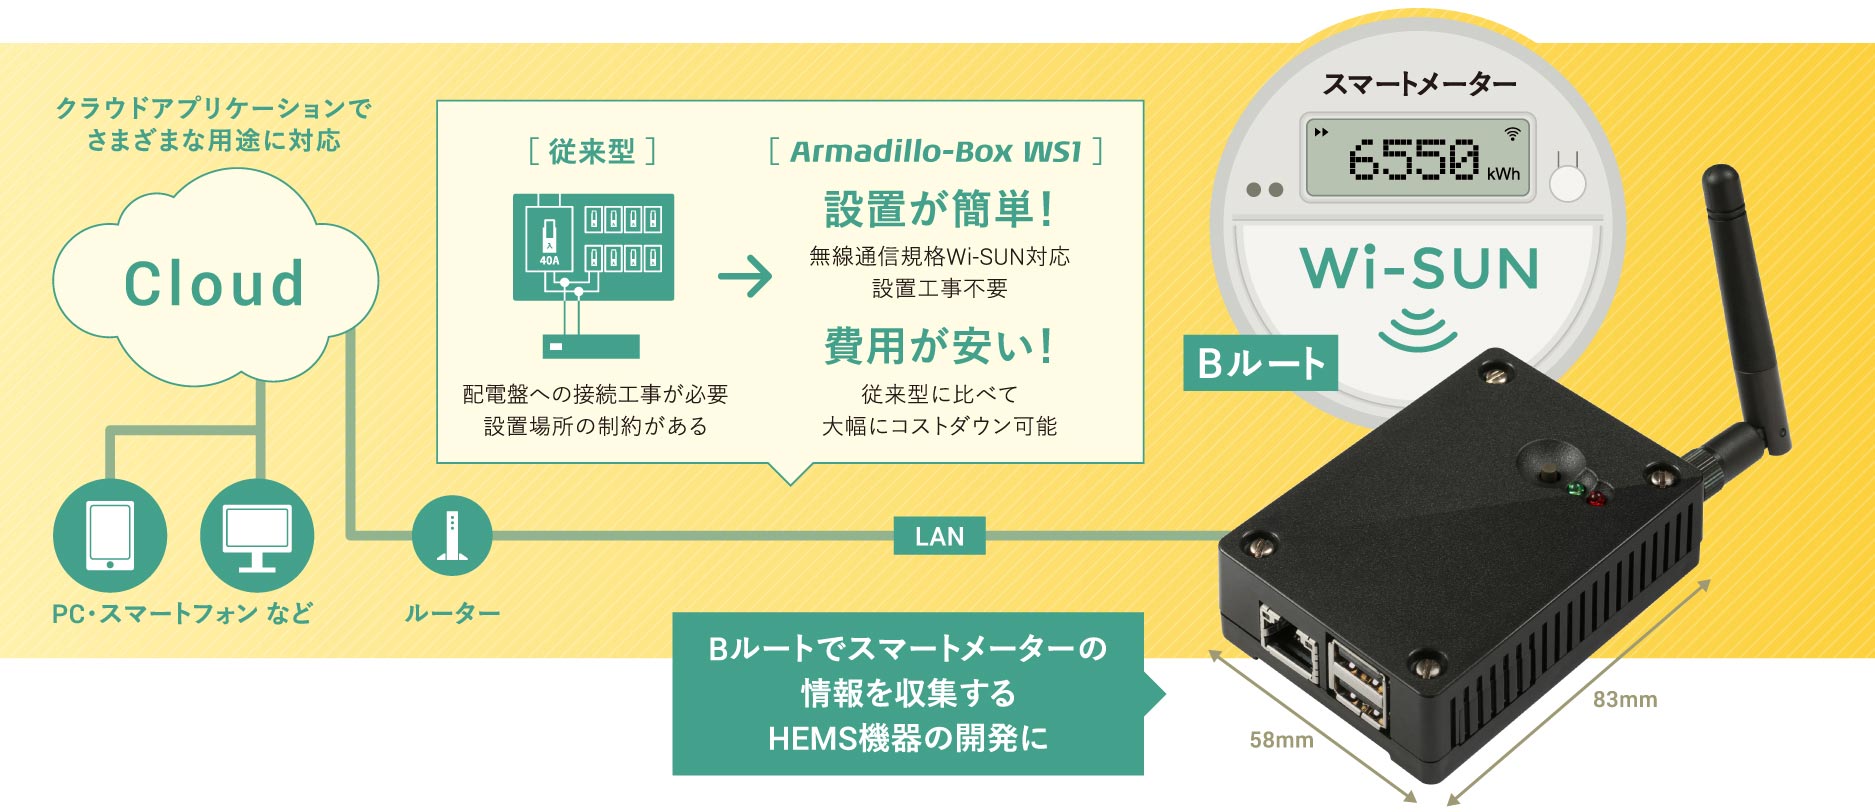 Armadillo-Box WS1全体像